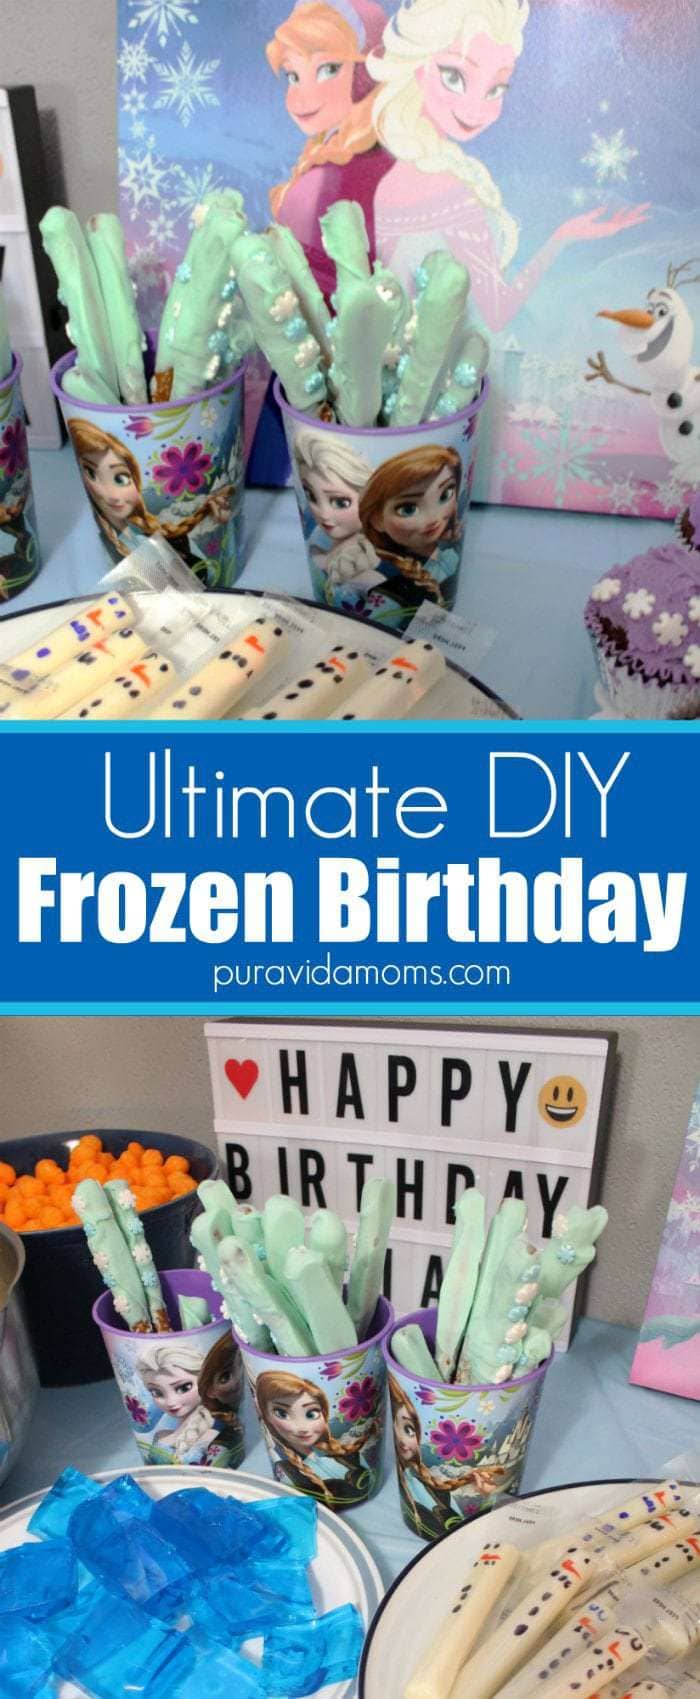 Ultimate DIY Frozen Birthday Party